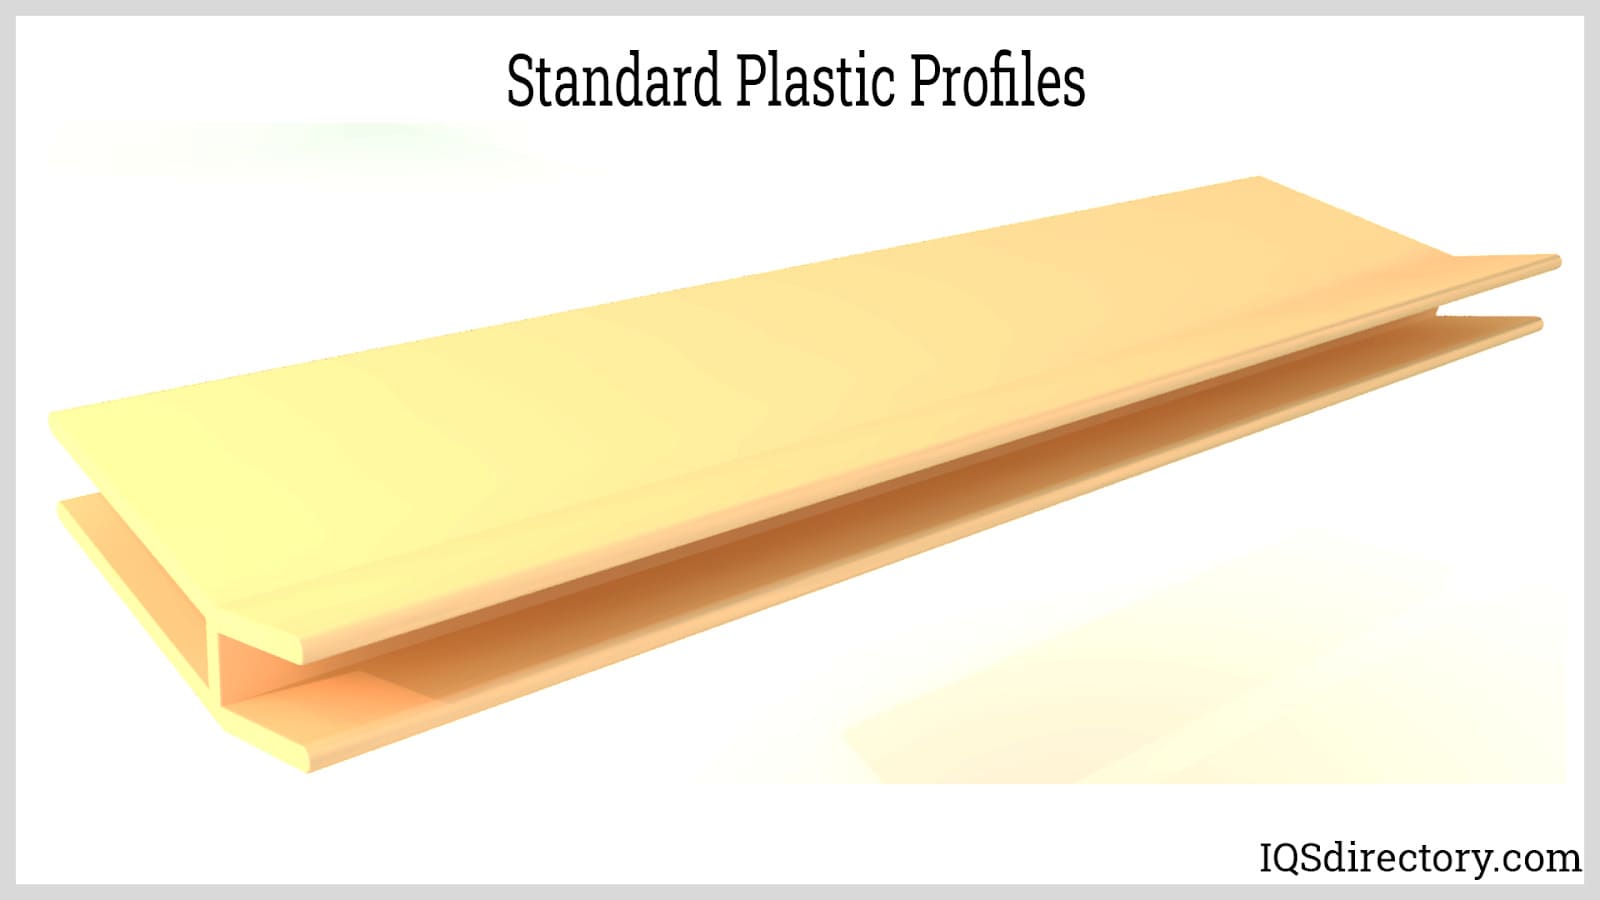 Standard Plastic Profiles